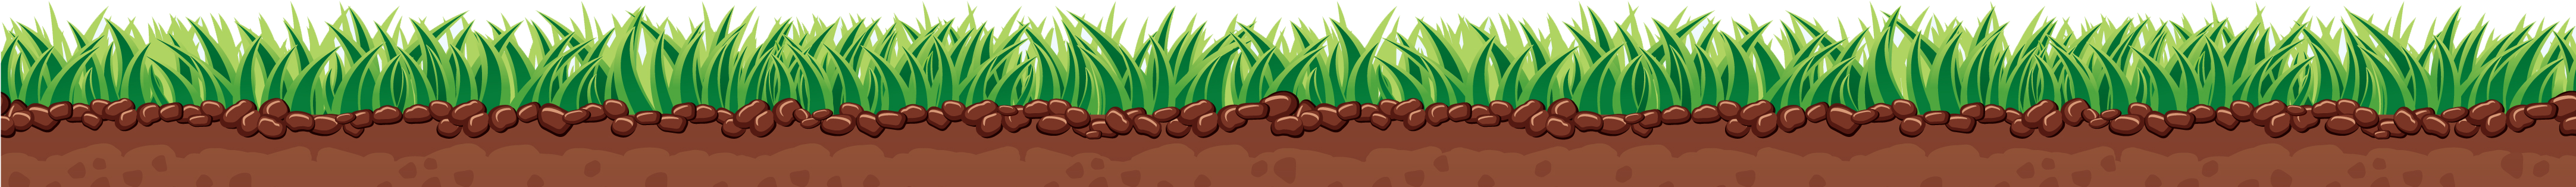 Grass Soil Cross Section Illustration PNG